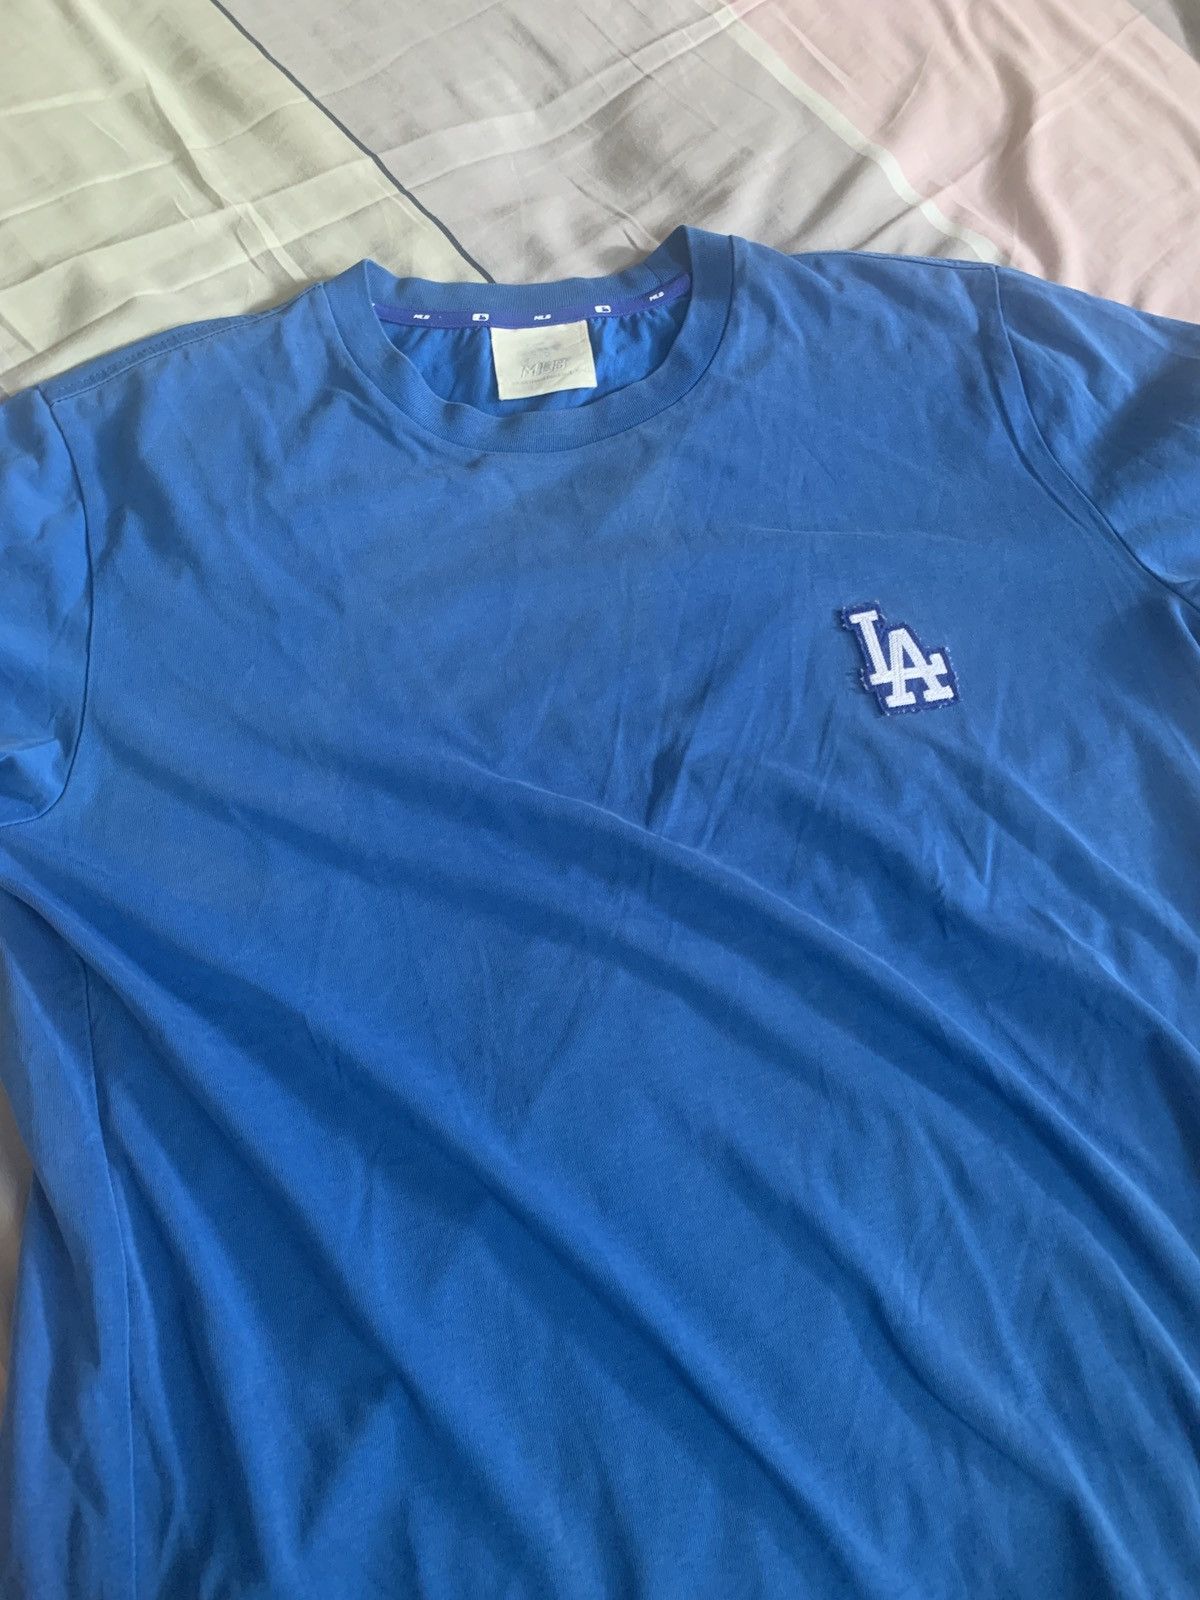 MLB LA Dodger shirt | Grailed